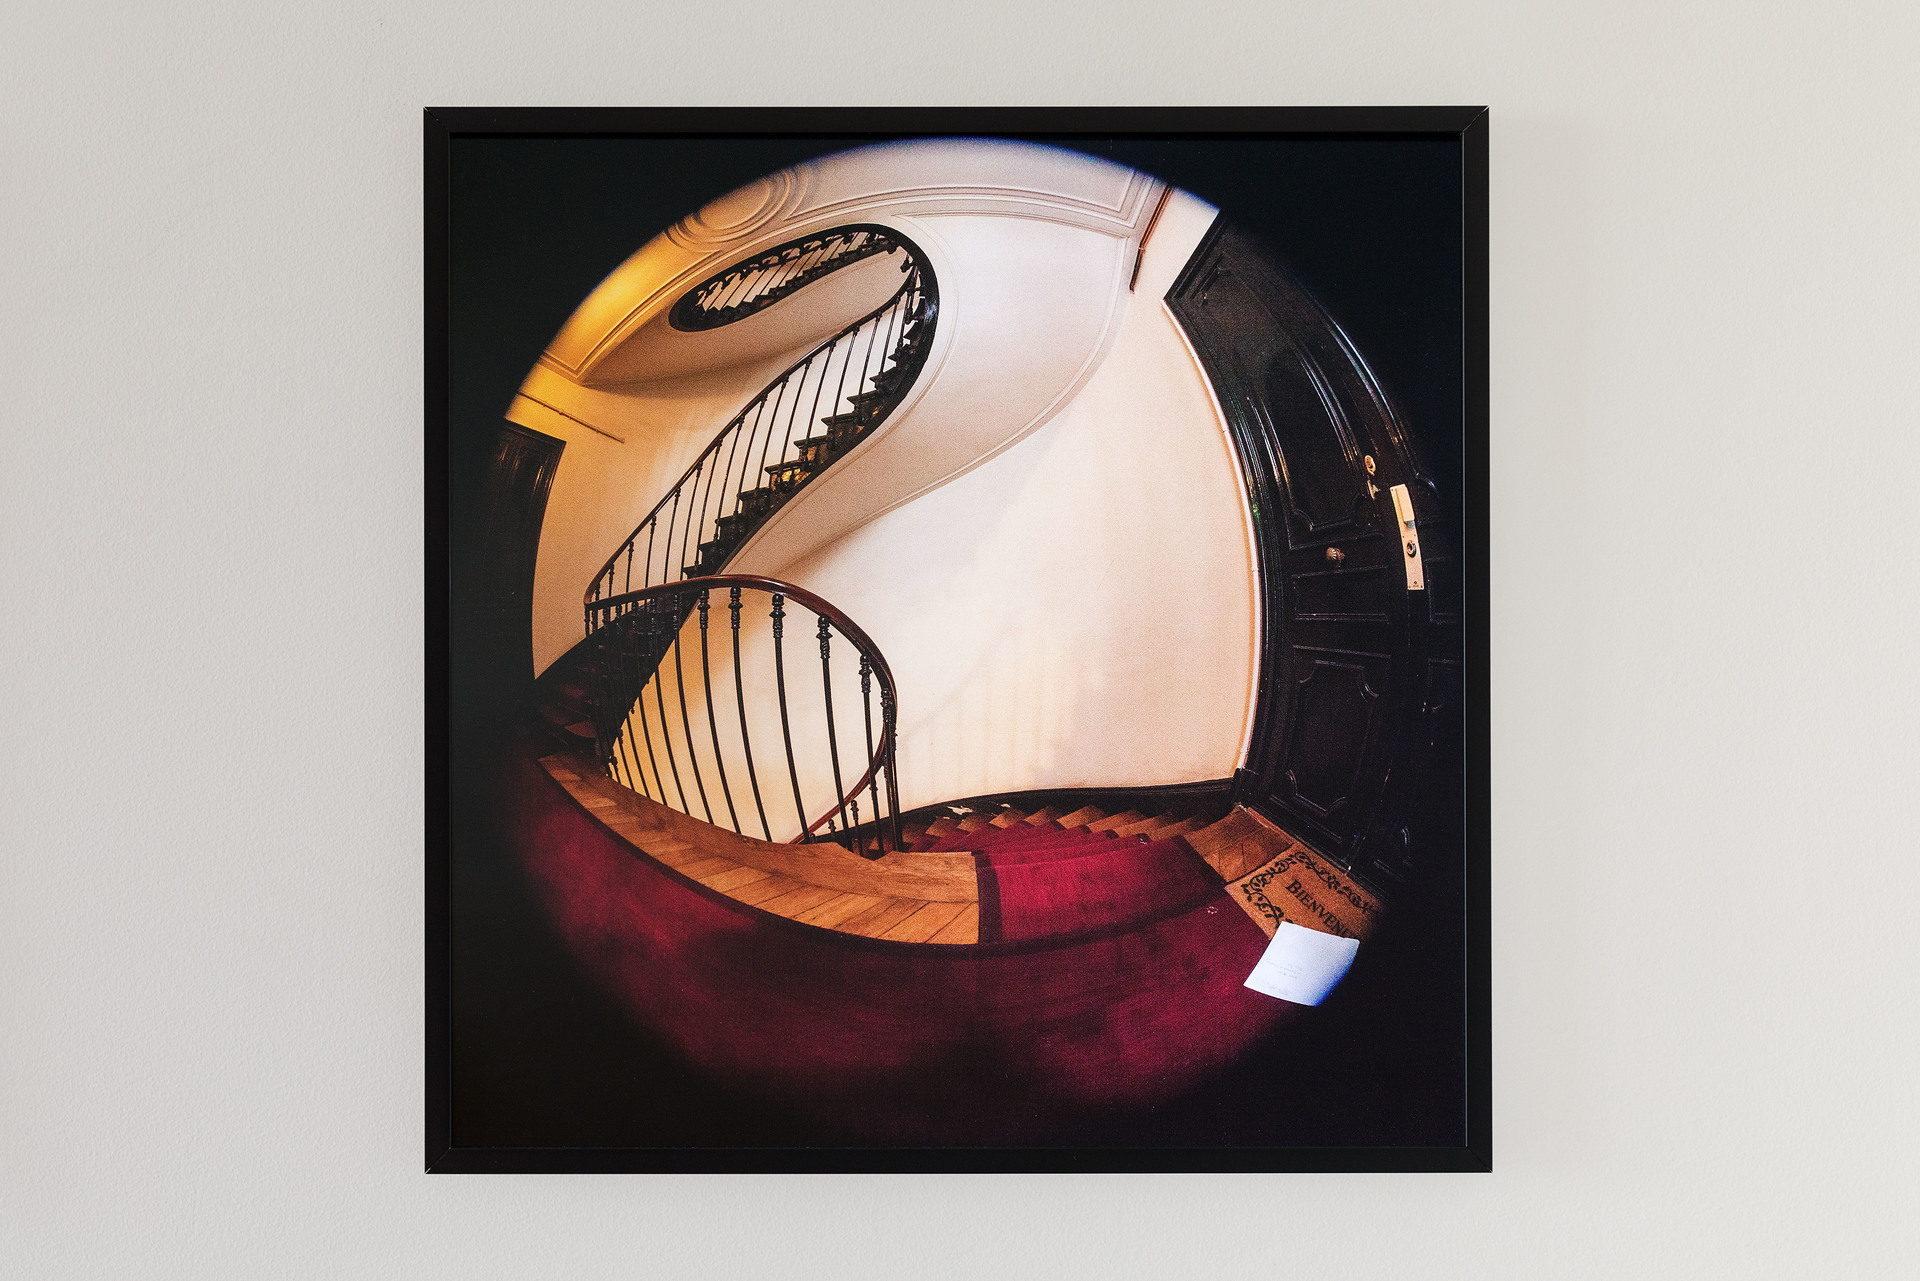 Emanuel Rossetti, “Stairs”, 2018Digitaler C-Print, 40x40cm, gerahmtPhoto Credit: Romain DarnaudCourtesy: Jan Kaps, Köln & Karma International, Zürich